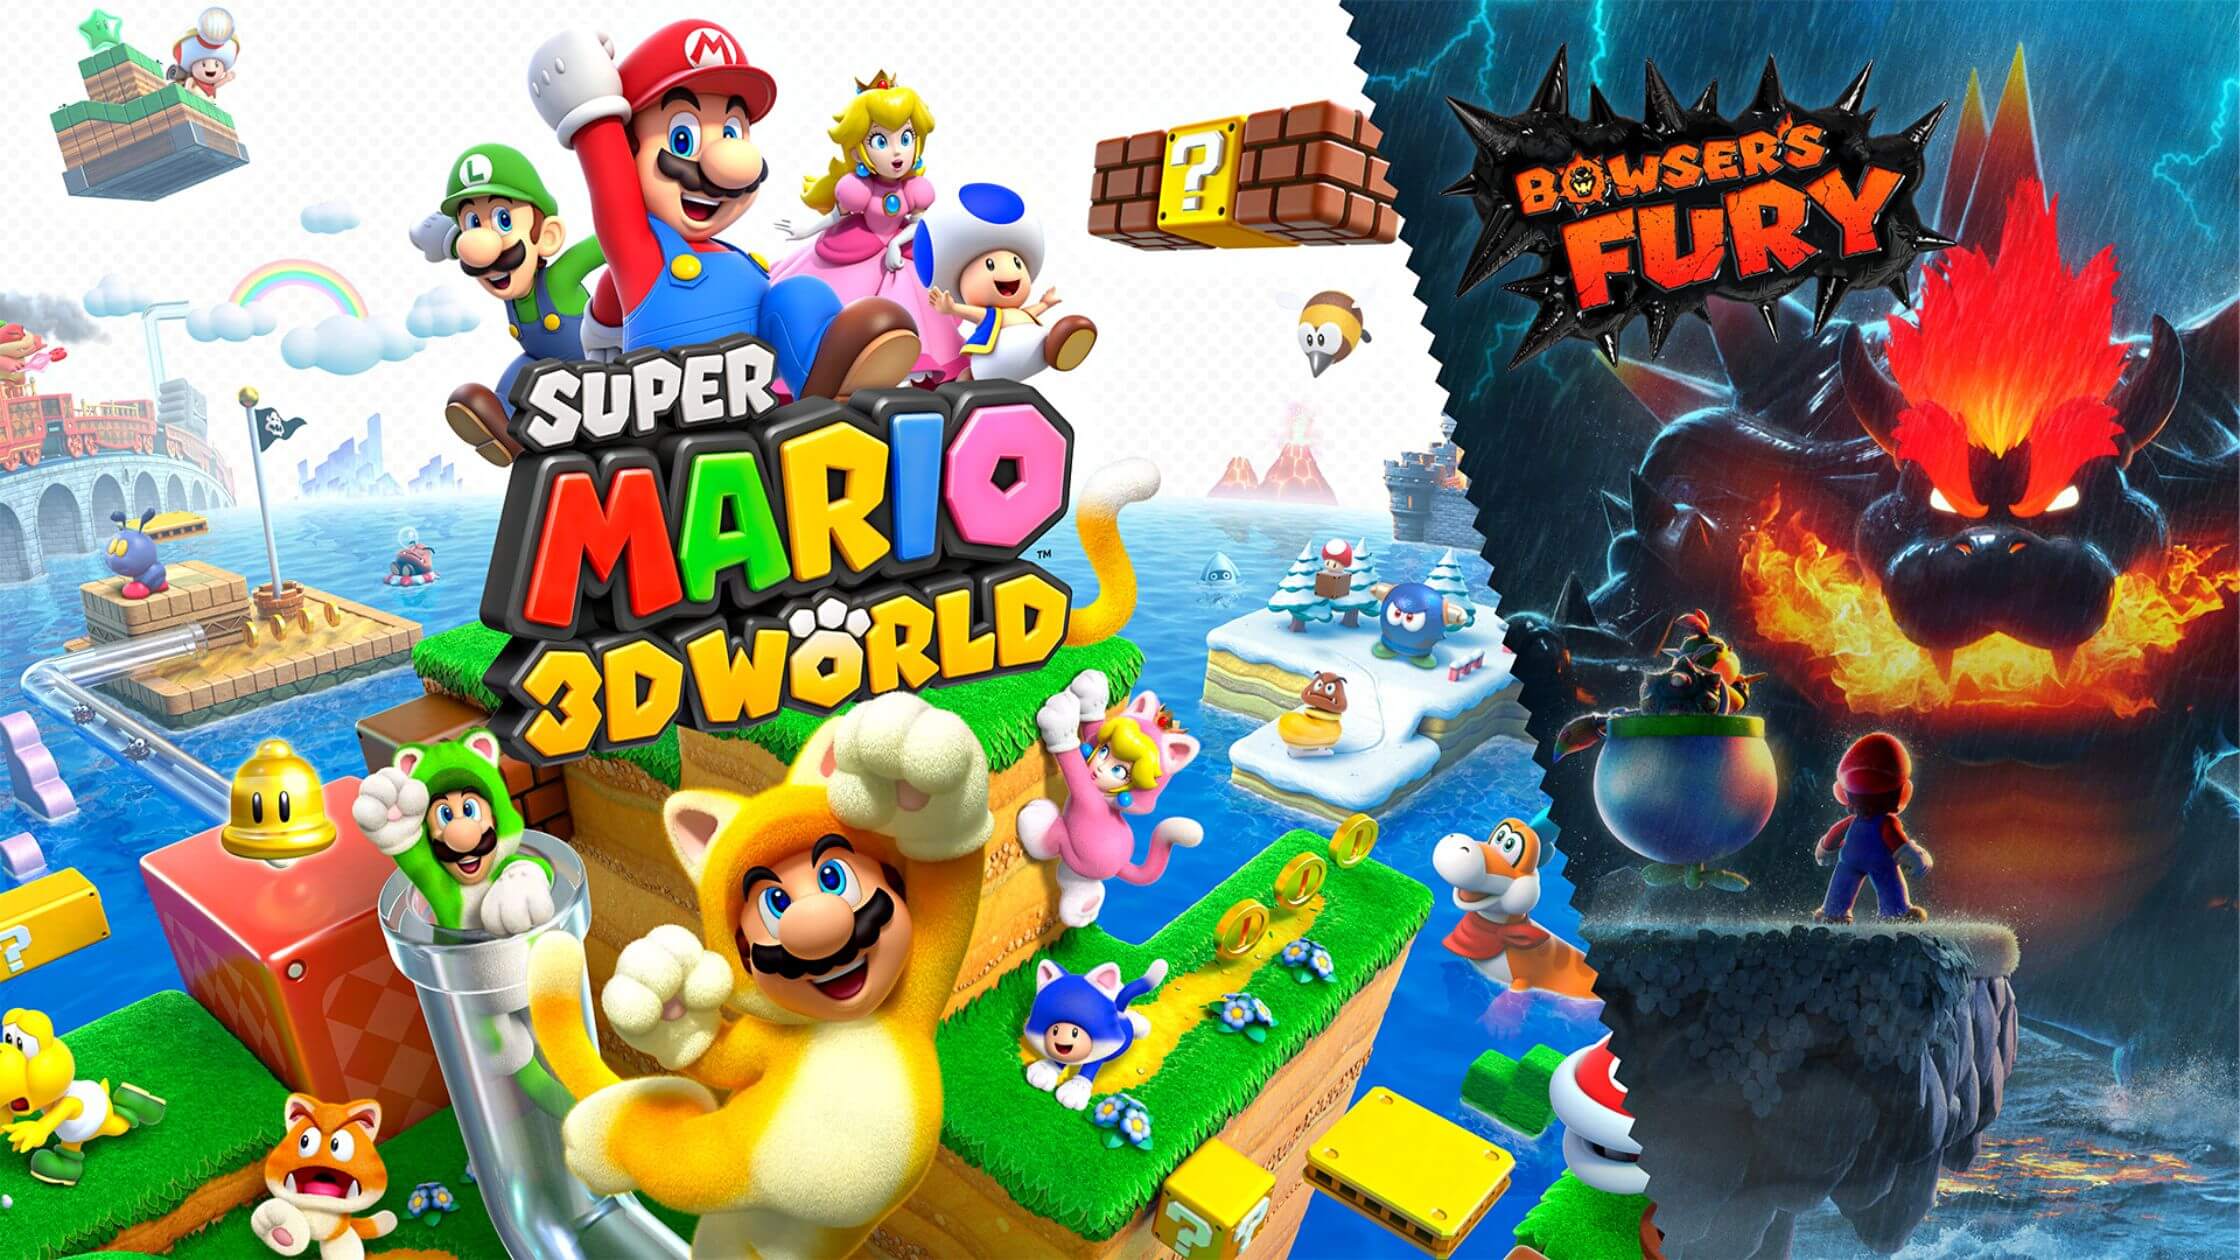 2. Super Mario 3D World + Bowser's Fury